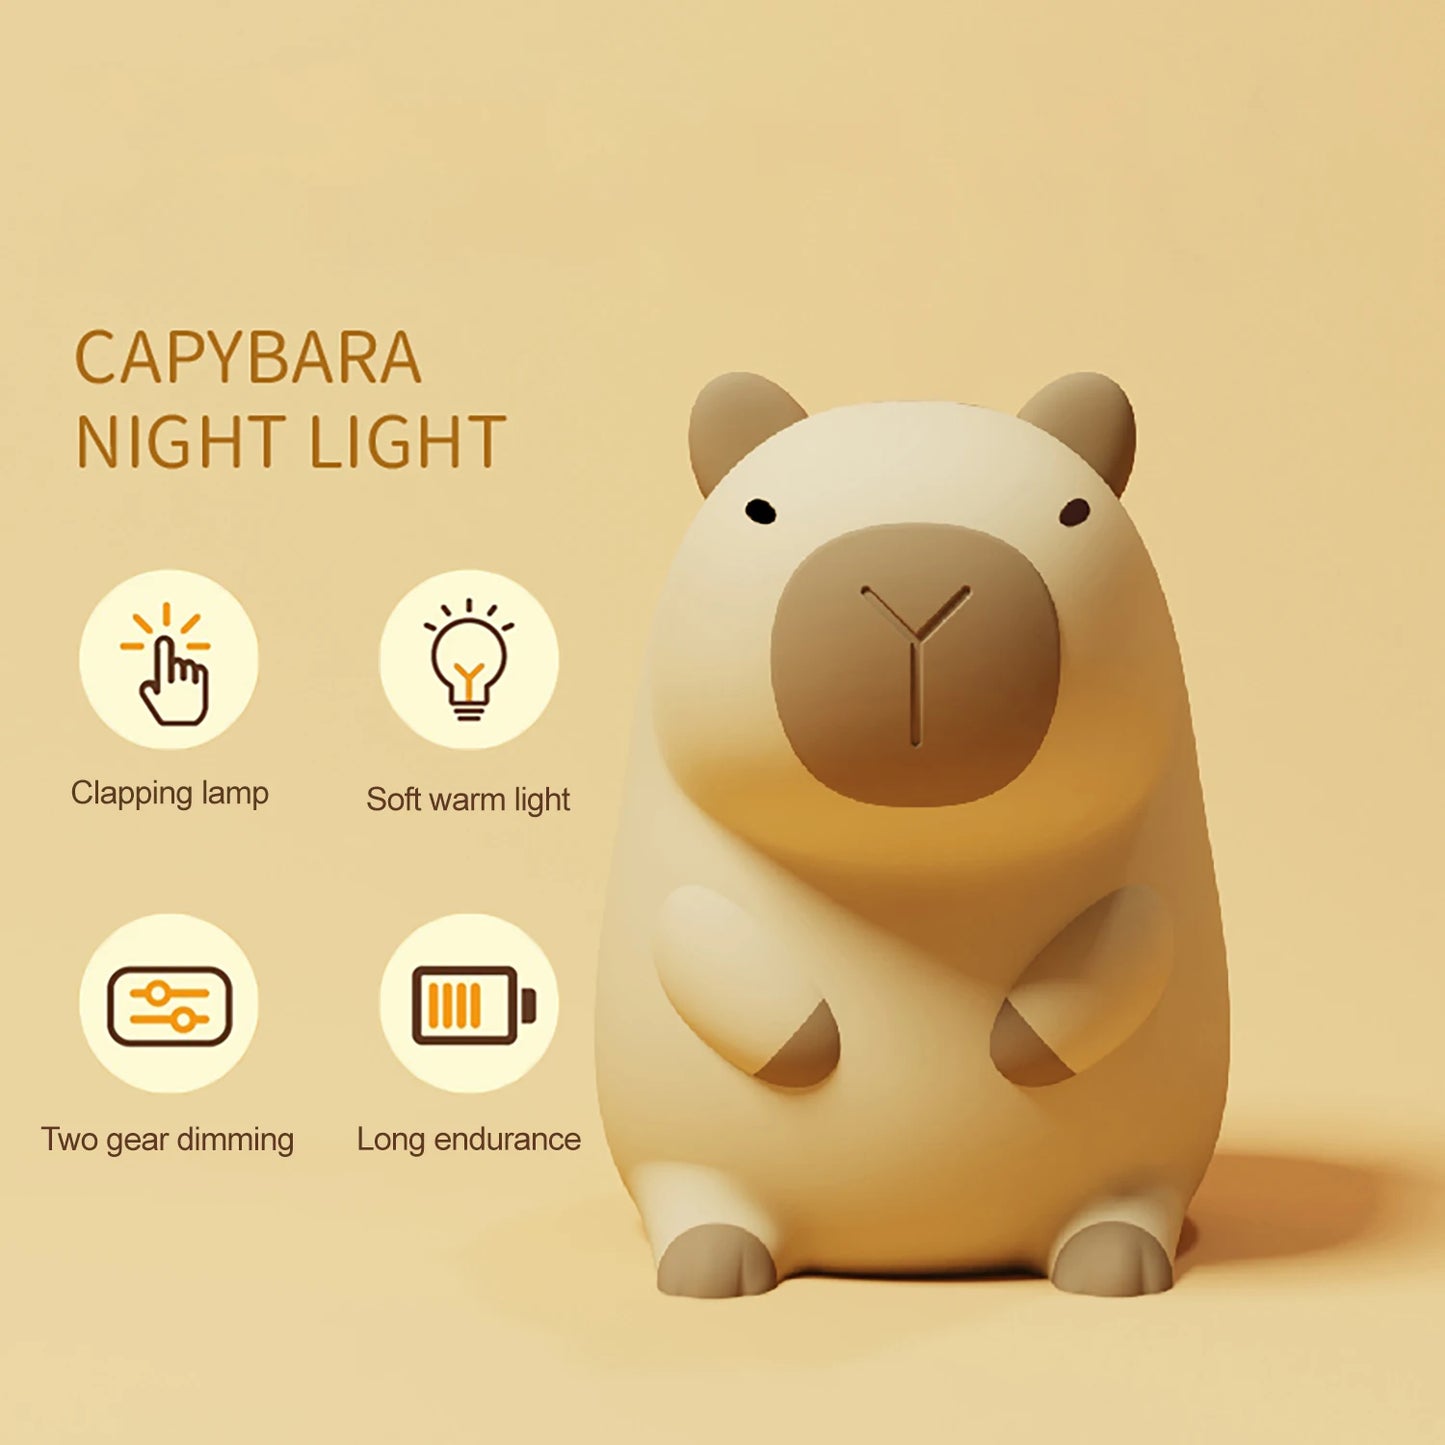 Capybara Night Light